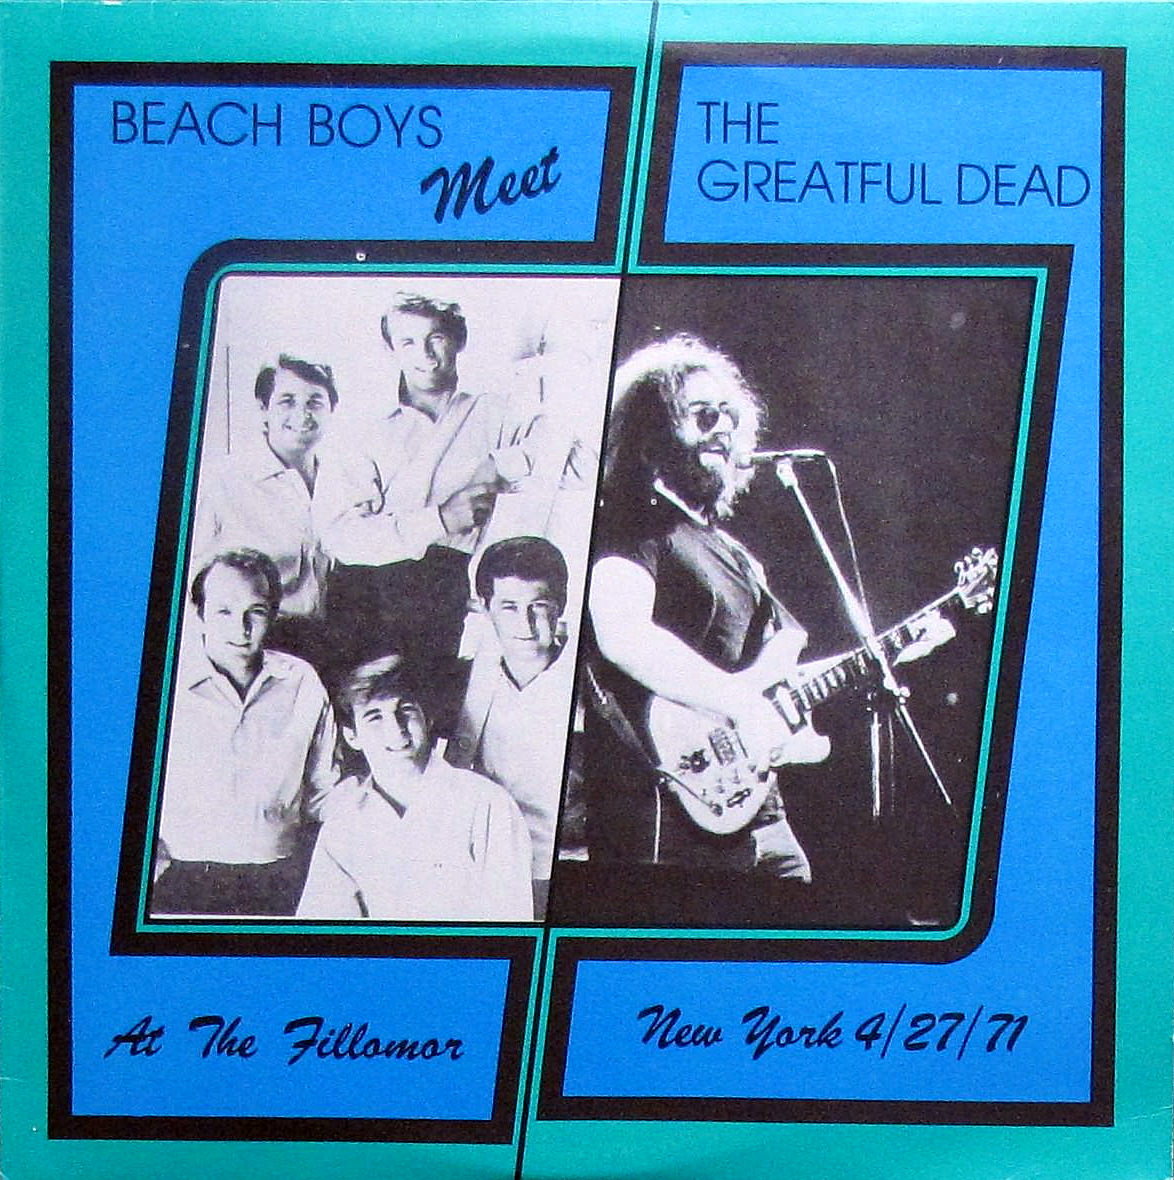 Beach Boys Meet The Grateful Dead cover